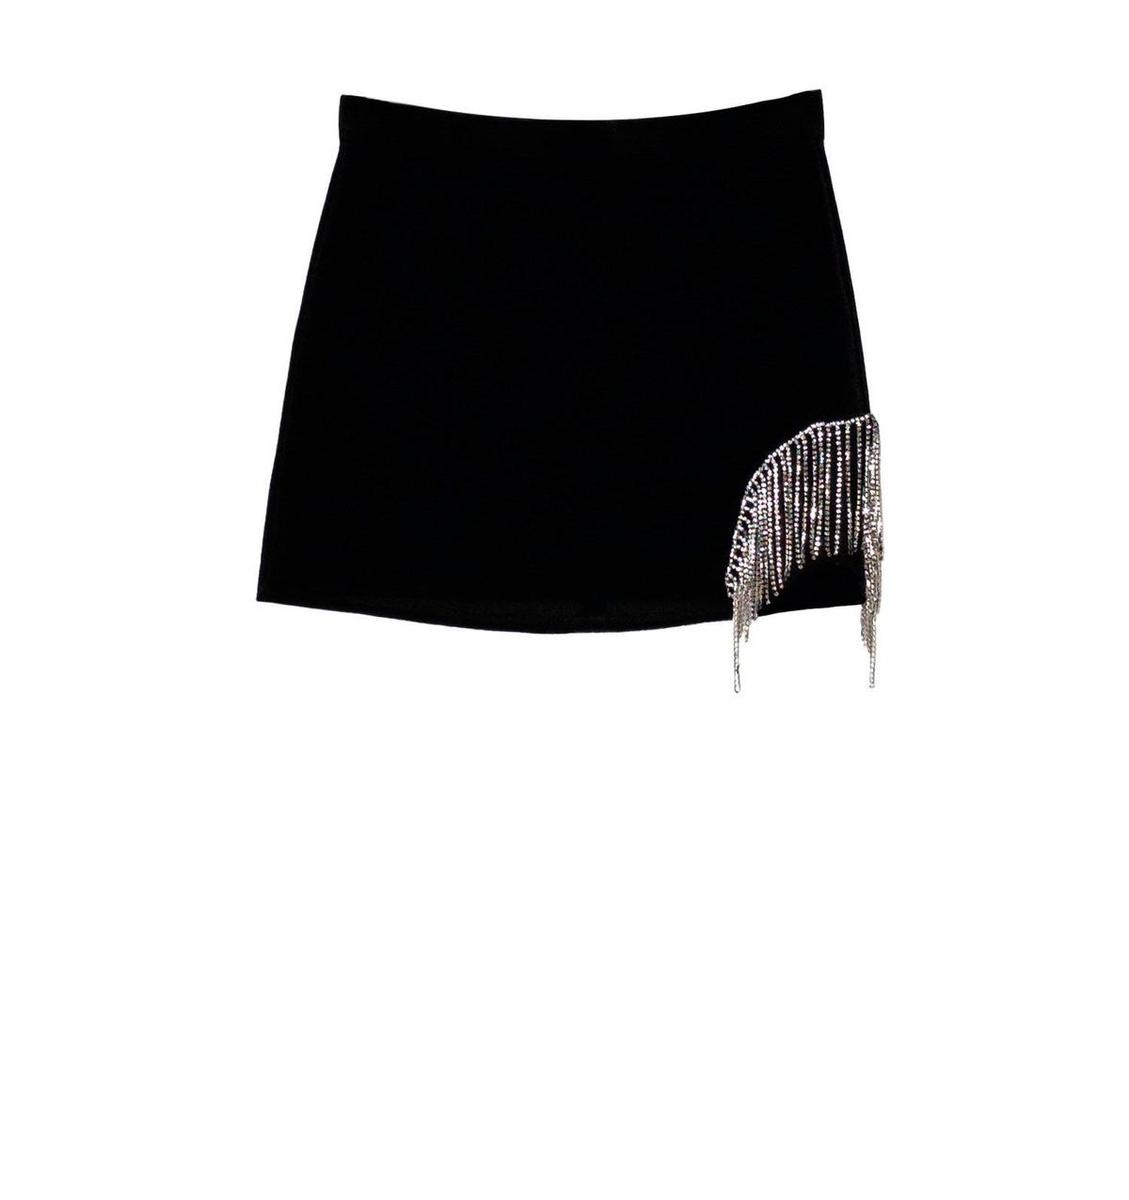 Minifalda con flecos de Bershka (25,99 euros)